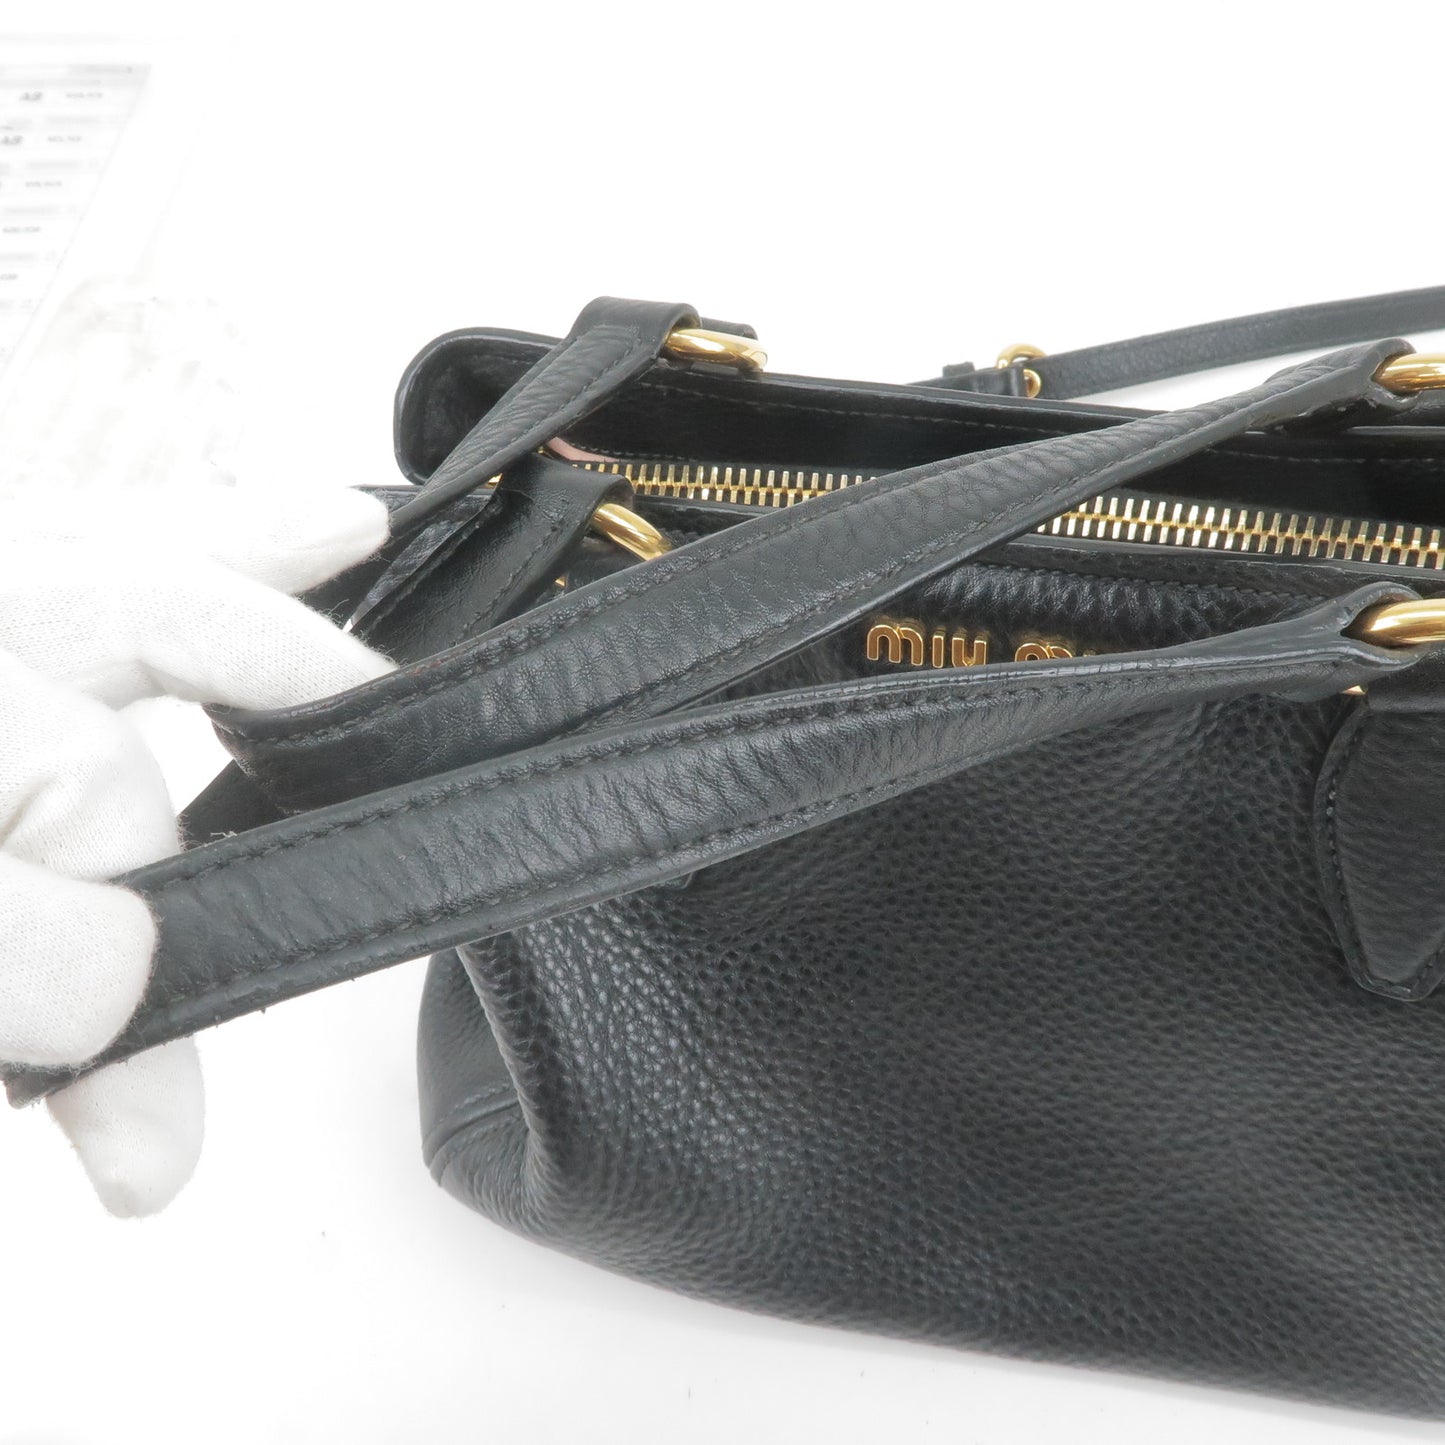 MIU MIU Logo Leather 2Way Bag Hand Bag NERO Black RT0438